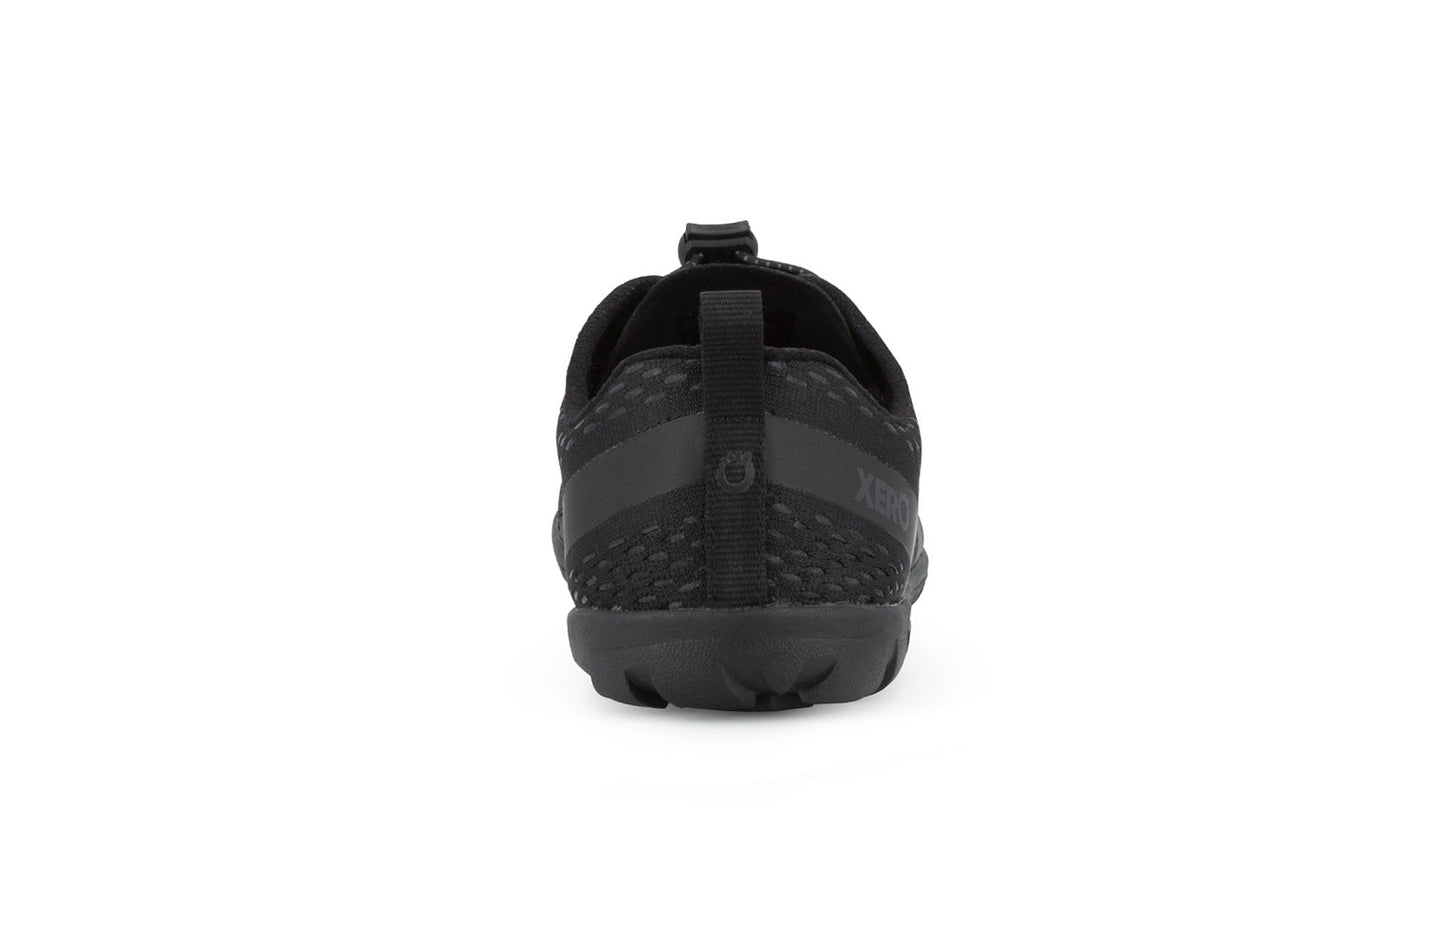 Xero Shoes Aqua X Sport Women barfods vandsko til kvinder i farven black, bagfra